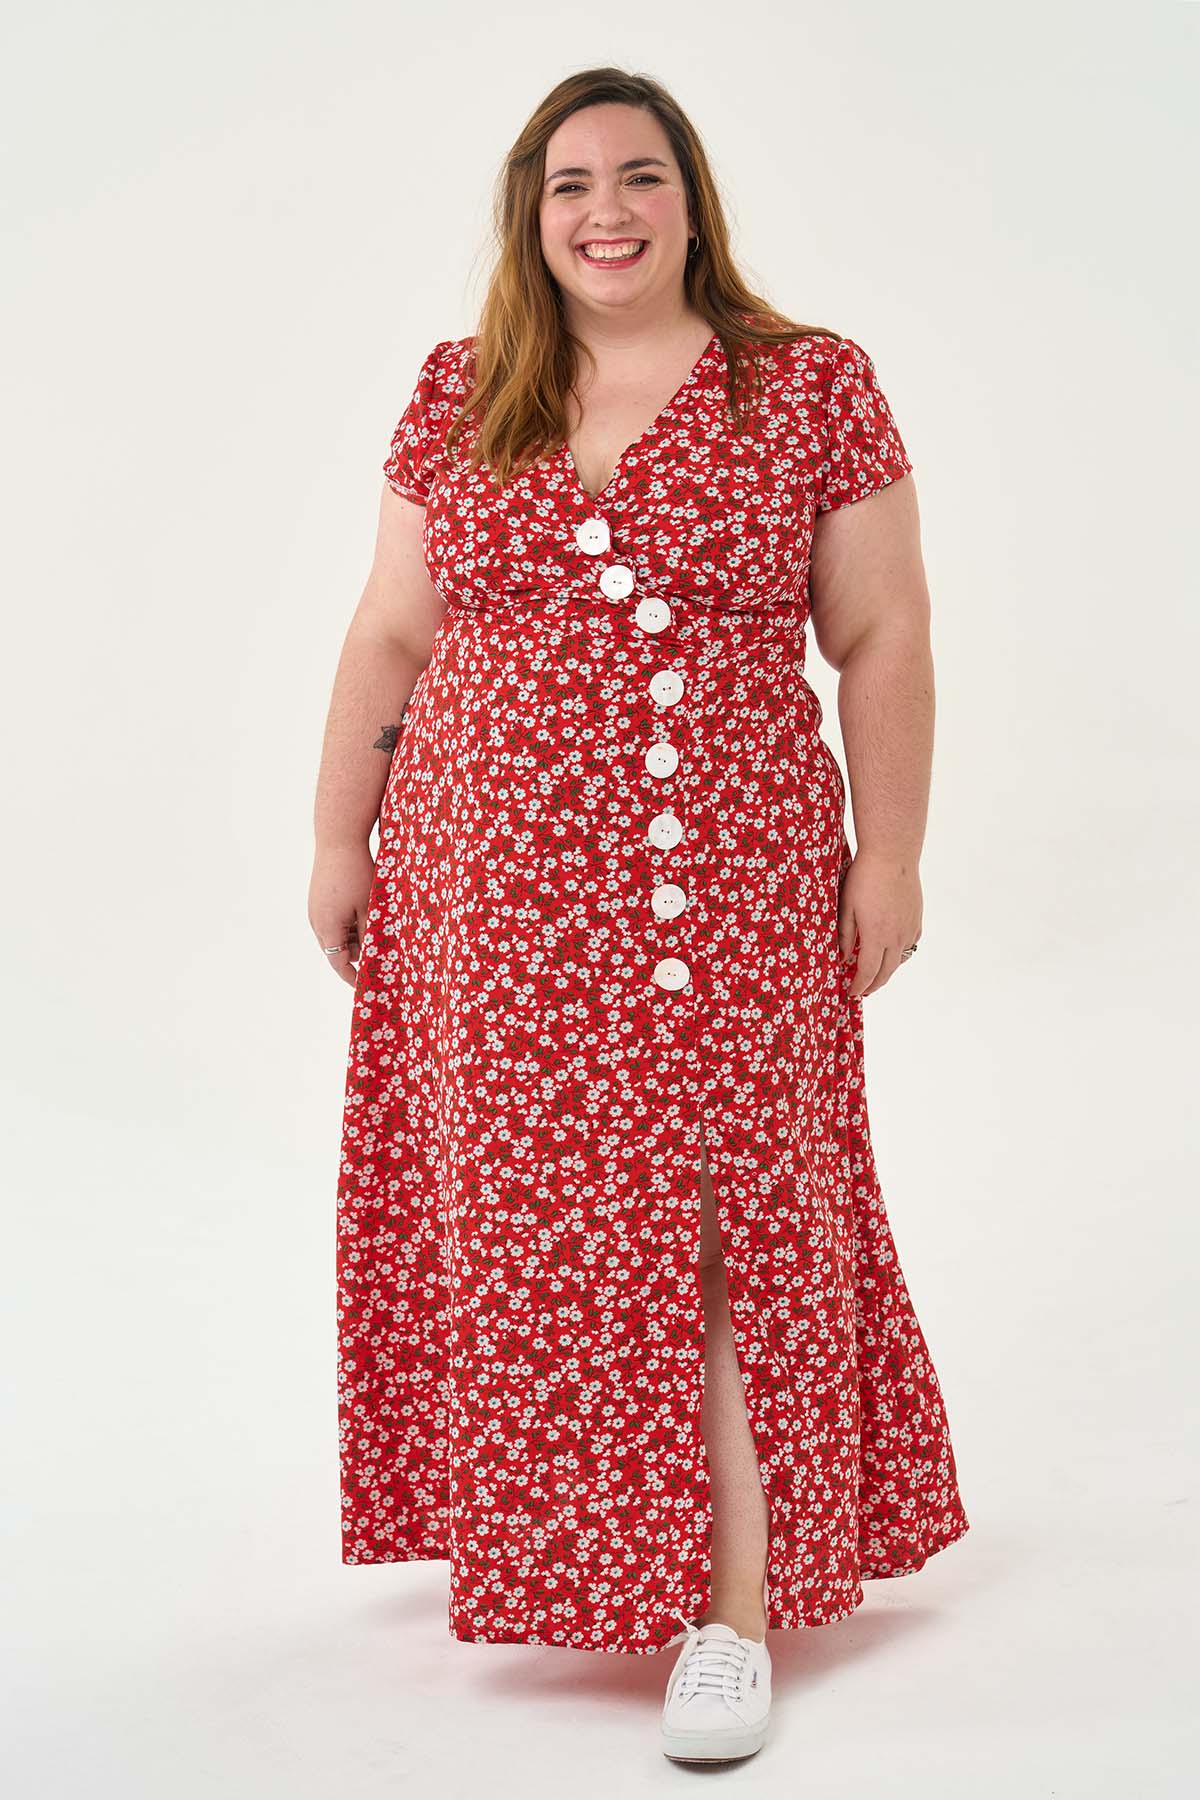 Sew Over It - Pippa Dress